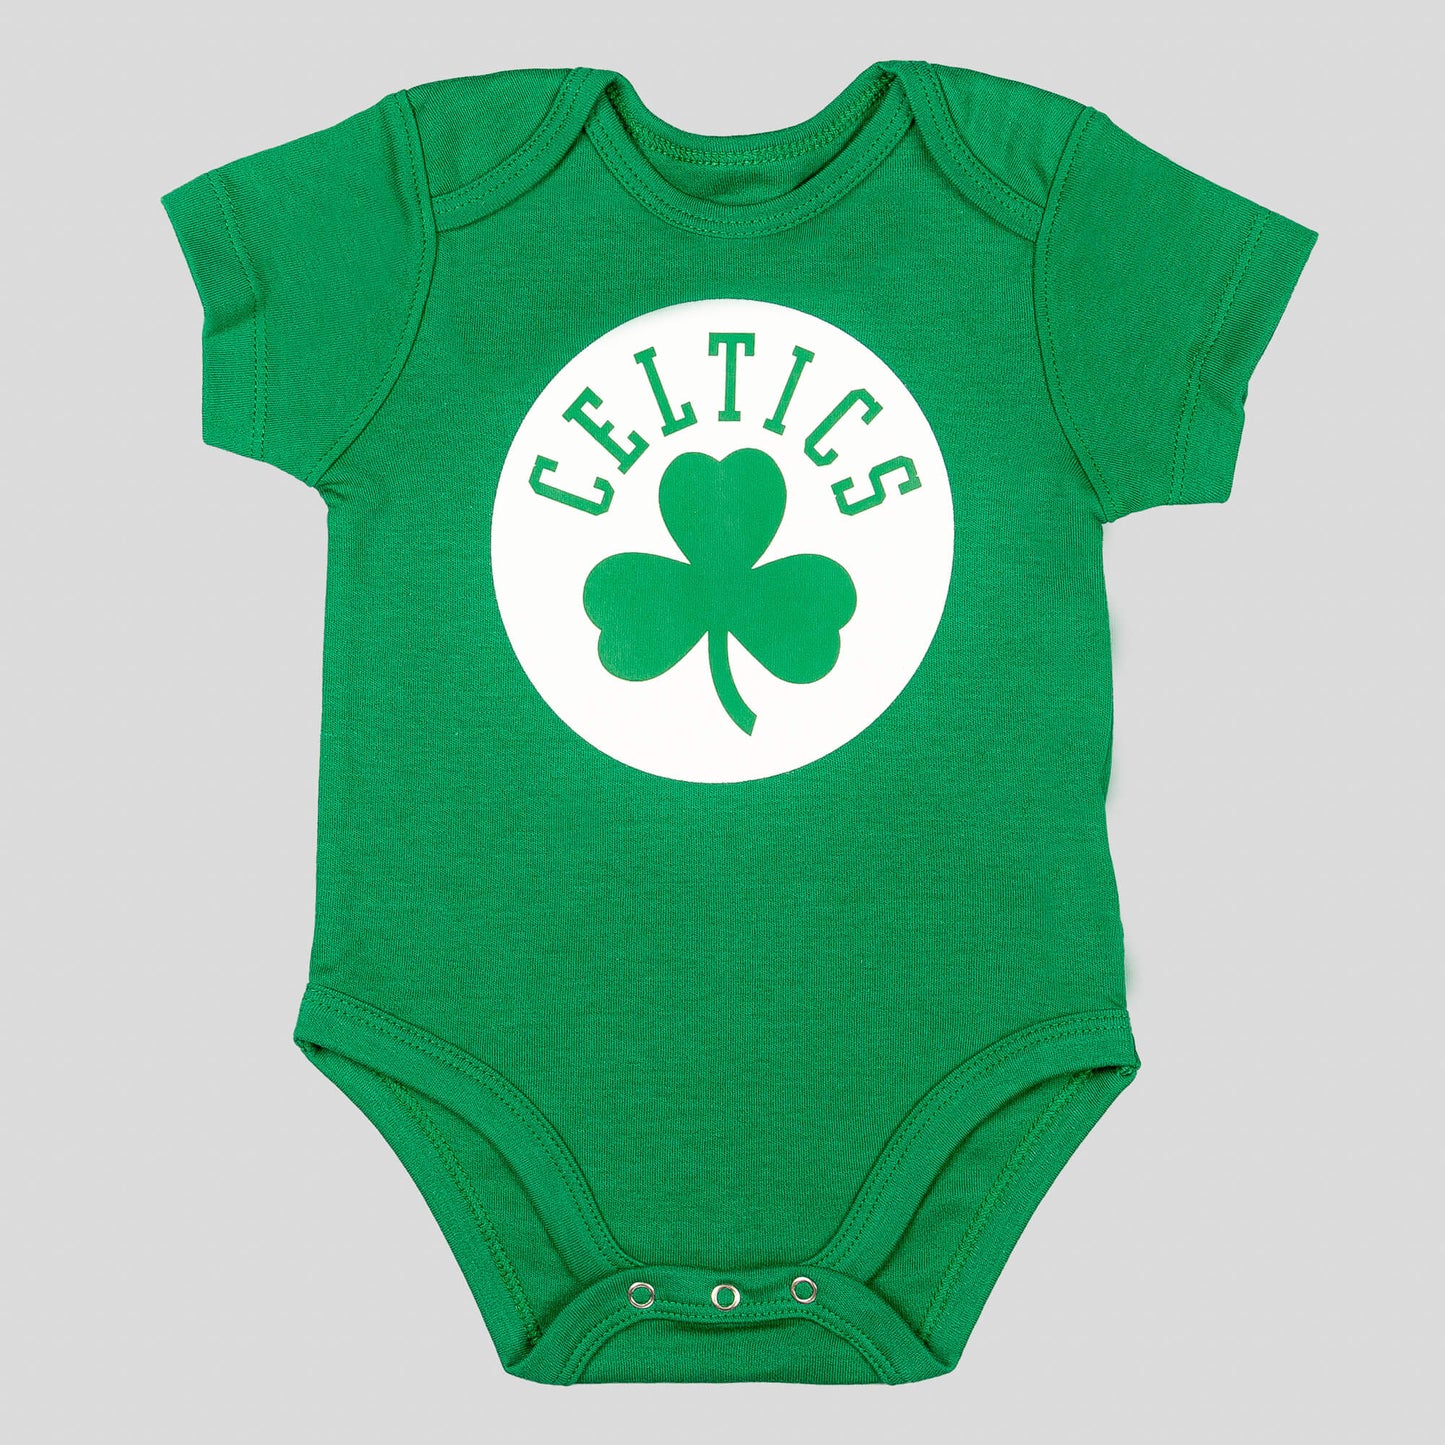 Outer Stuff Born To Win 3 Pack Creepr Boston Celtics Green/Grey